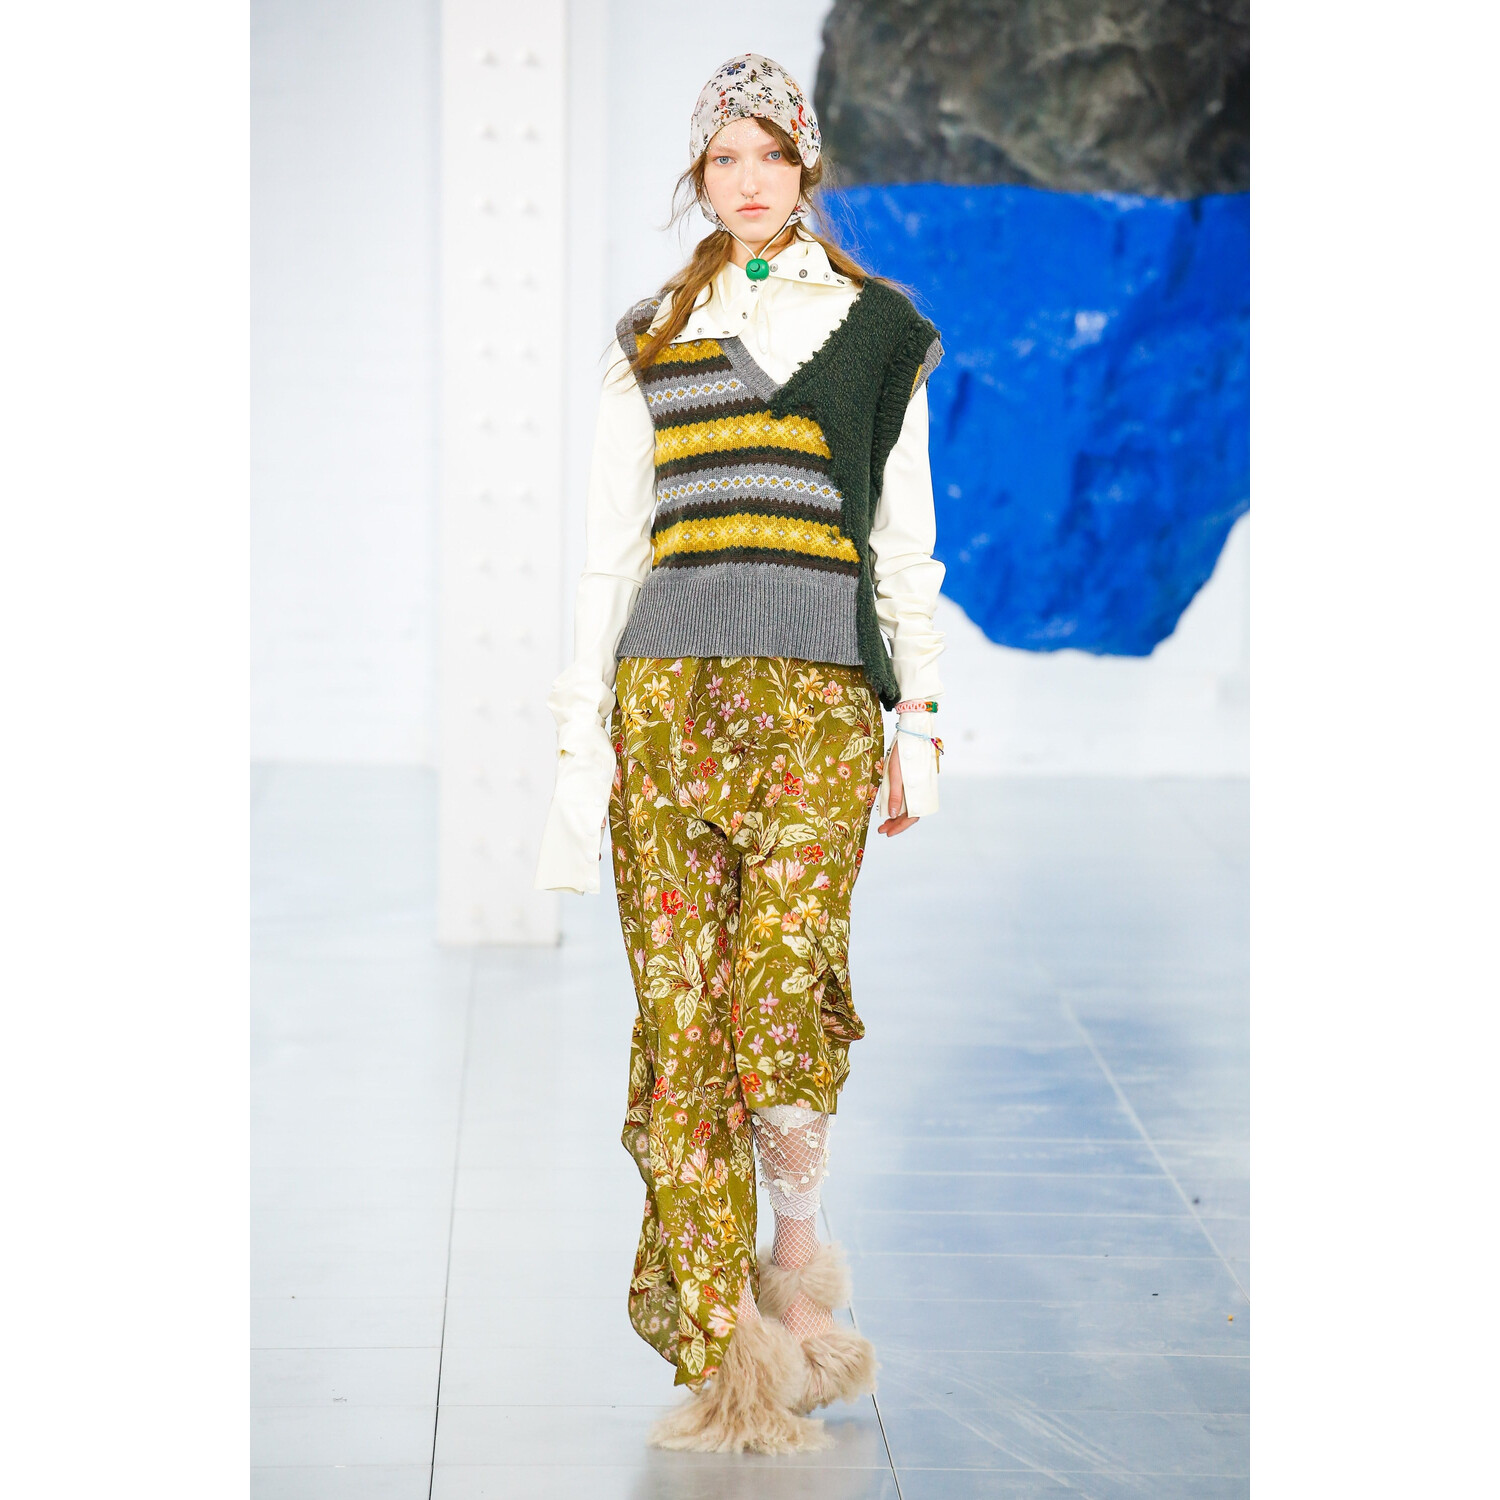 Фото Preen by Thornton Bregazzi Fall 2018 Ready-to-Wear Preen by Thornton Bregazzi осень зима 2018 коллекция неделя моды в Лондане LFW Mainstyles